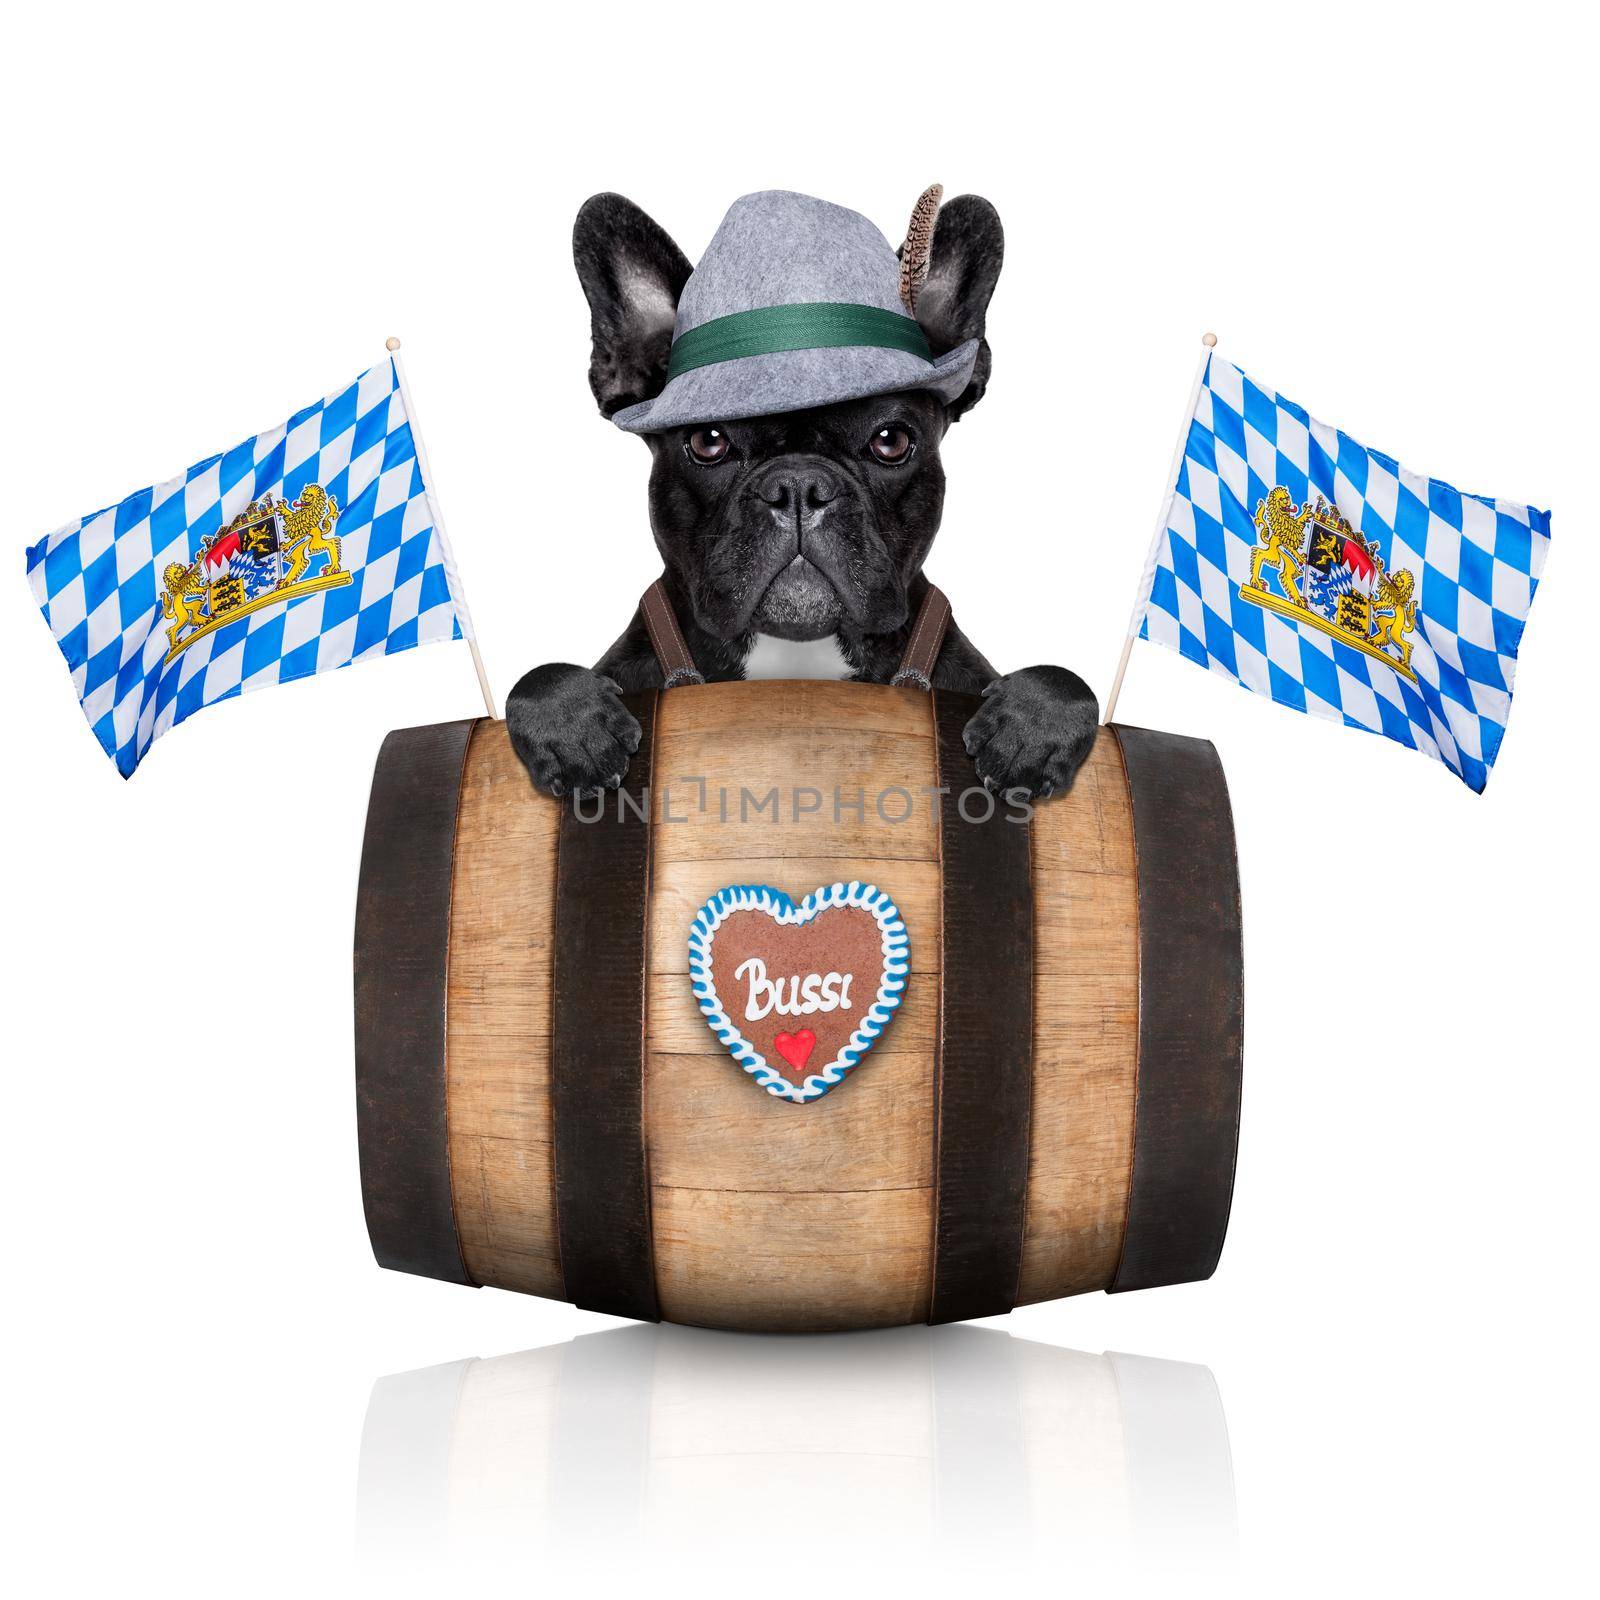 bavarian german dog behind beer barrel and  bavarian flags